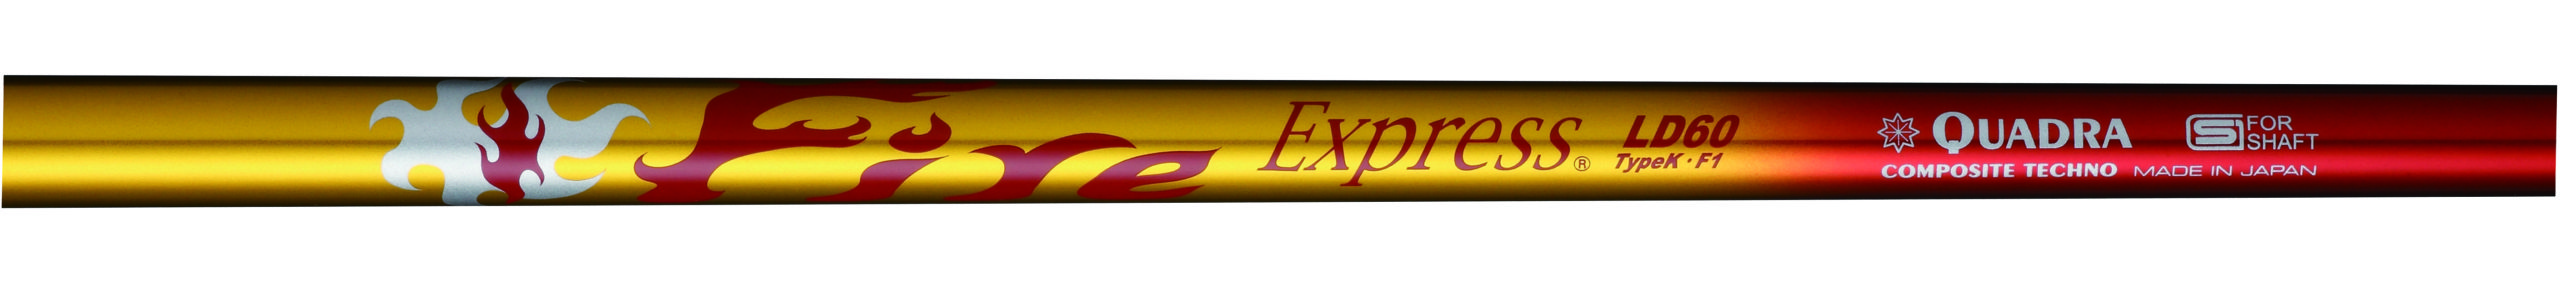 Fire Express LD60｜旧製品｜コンポジットテクノ株式会社 | COMPOSITE 